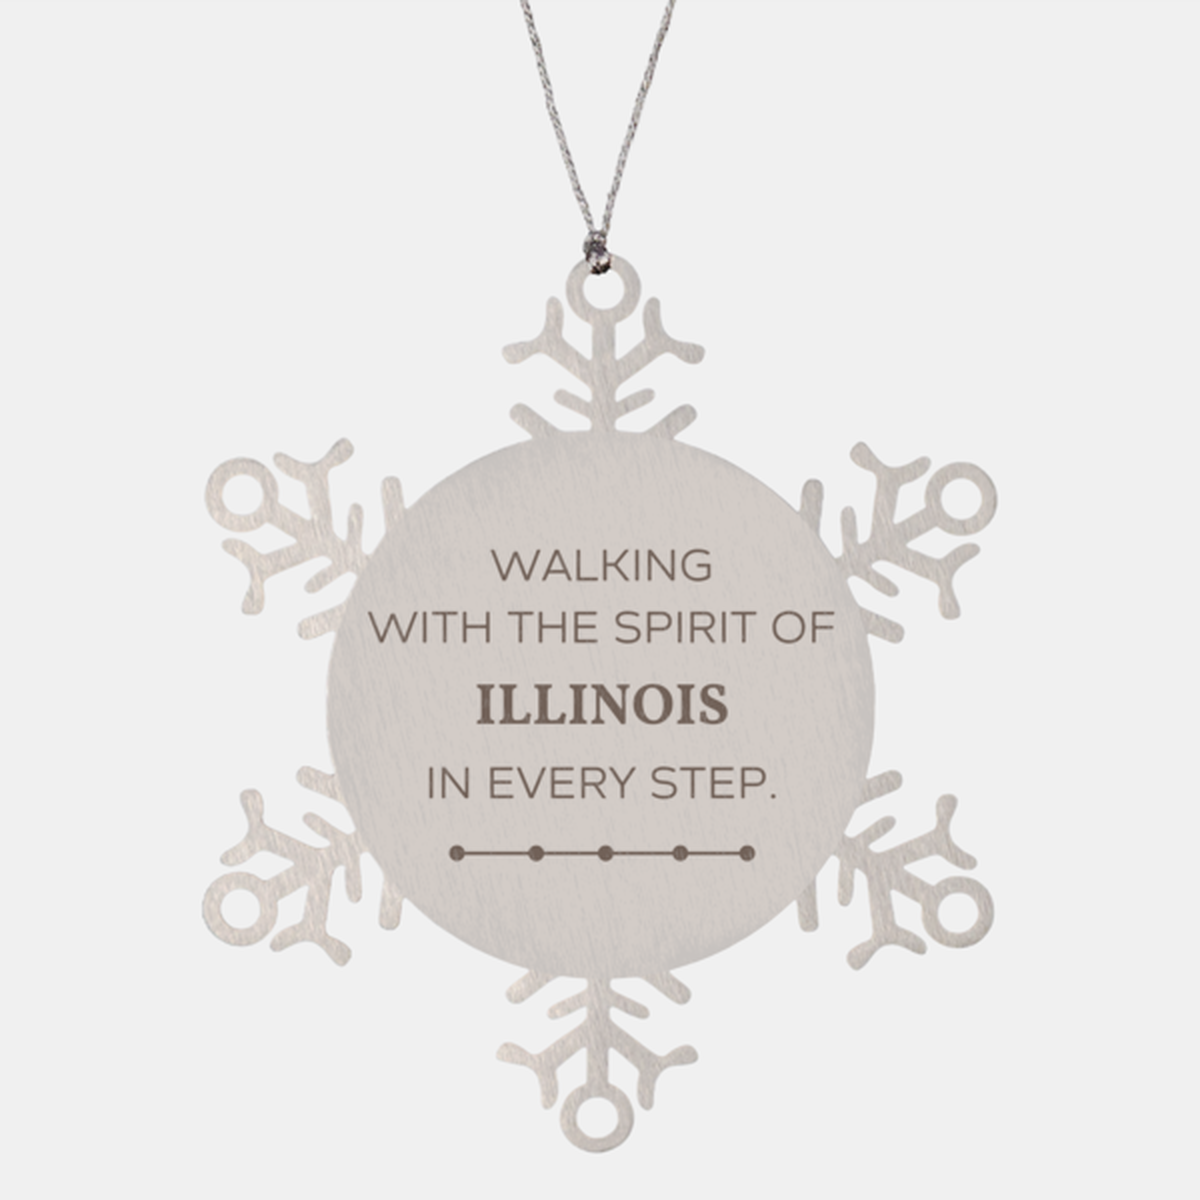 Illinois Gifts, Walking with the spirit, Love Illinois Birthday Christmas Snowflake Ornament For Illinois People, Men, Women, Friends